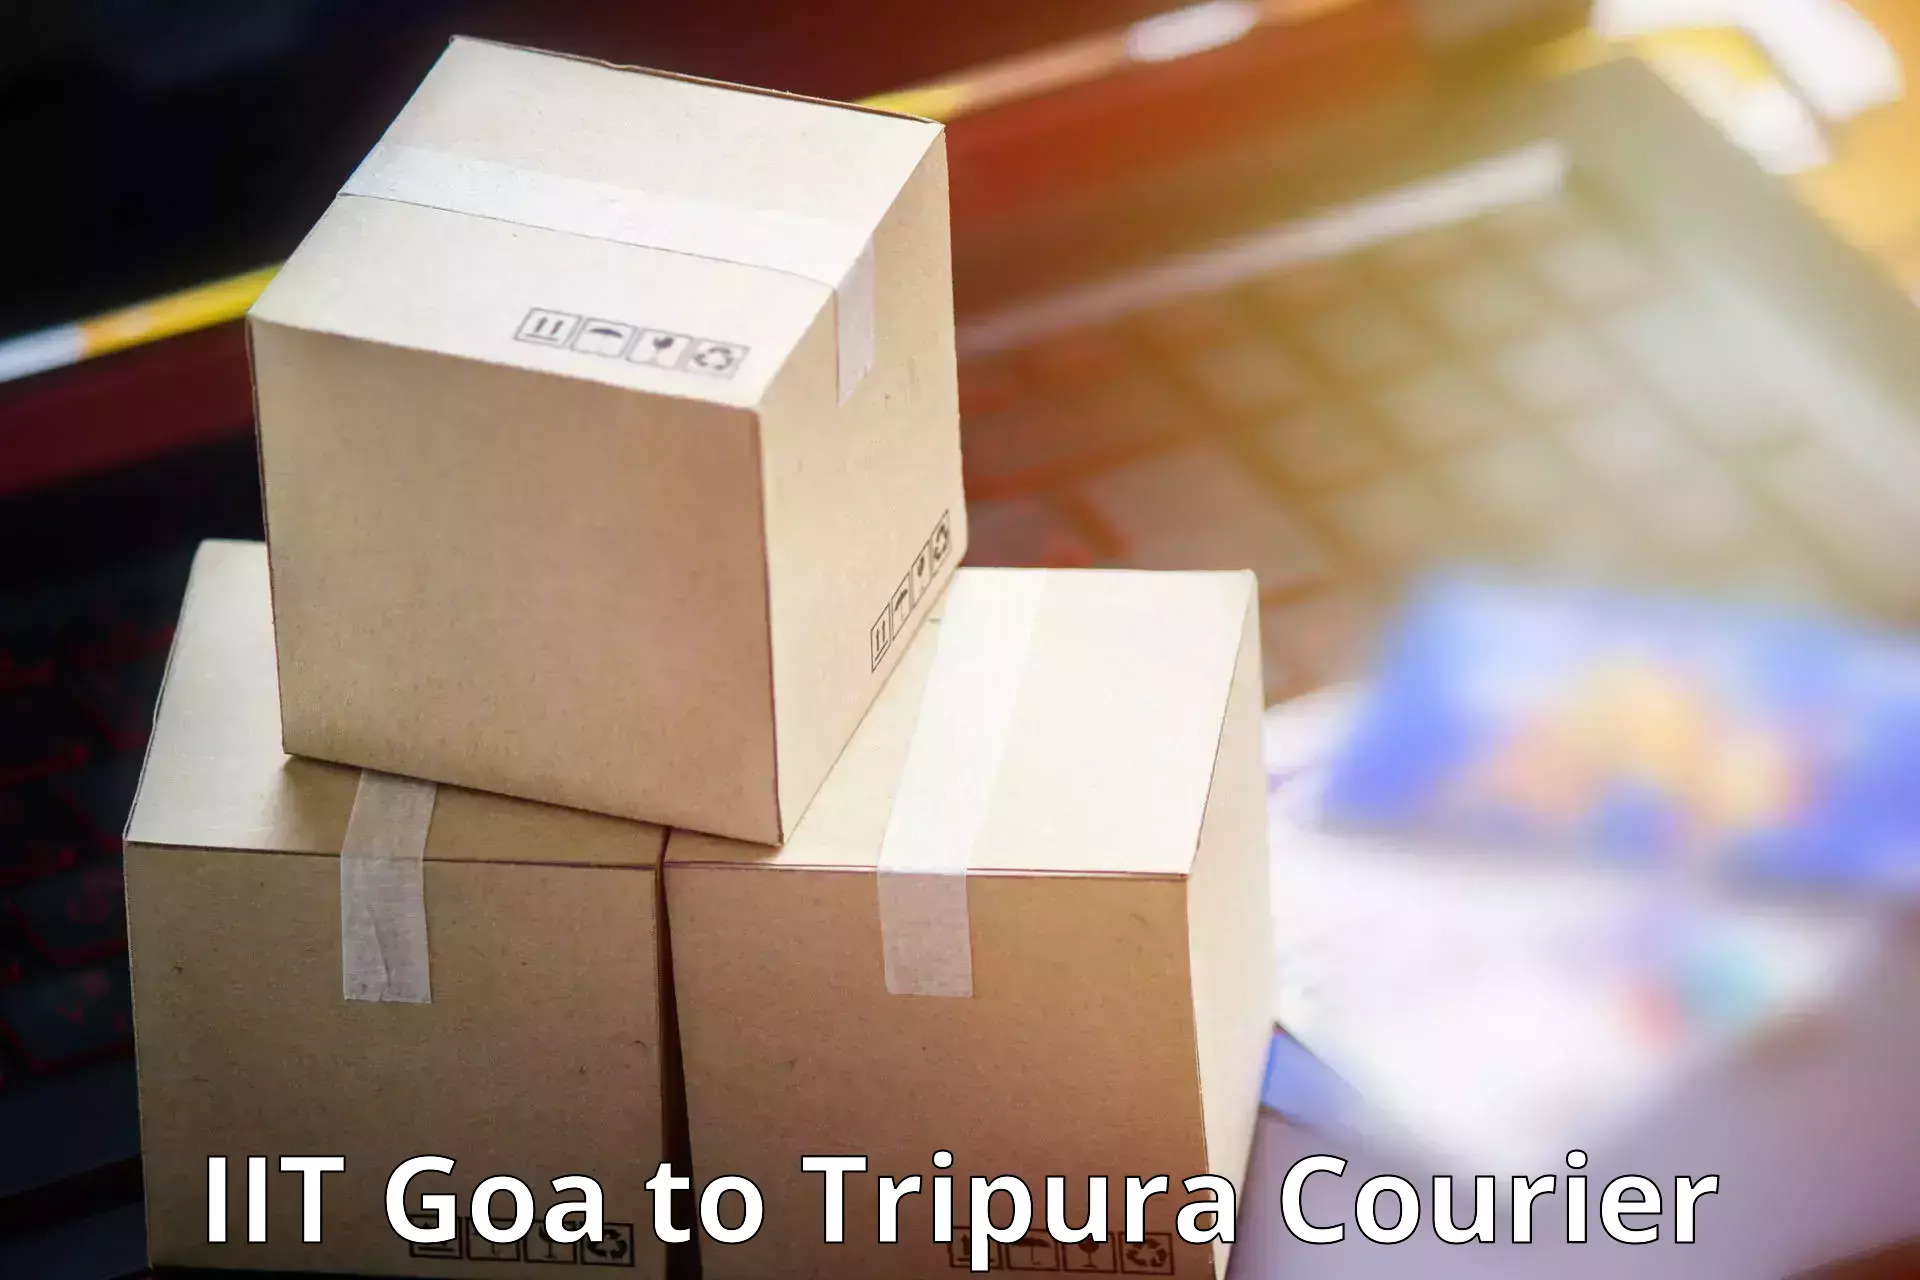 Cash on delivery service IIT Goa to Aambasa